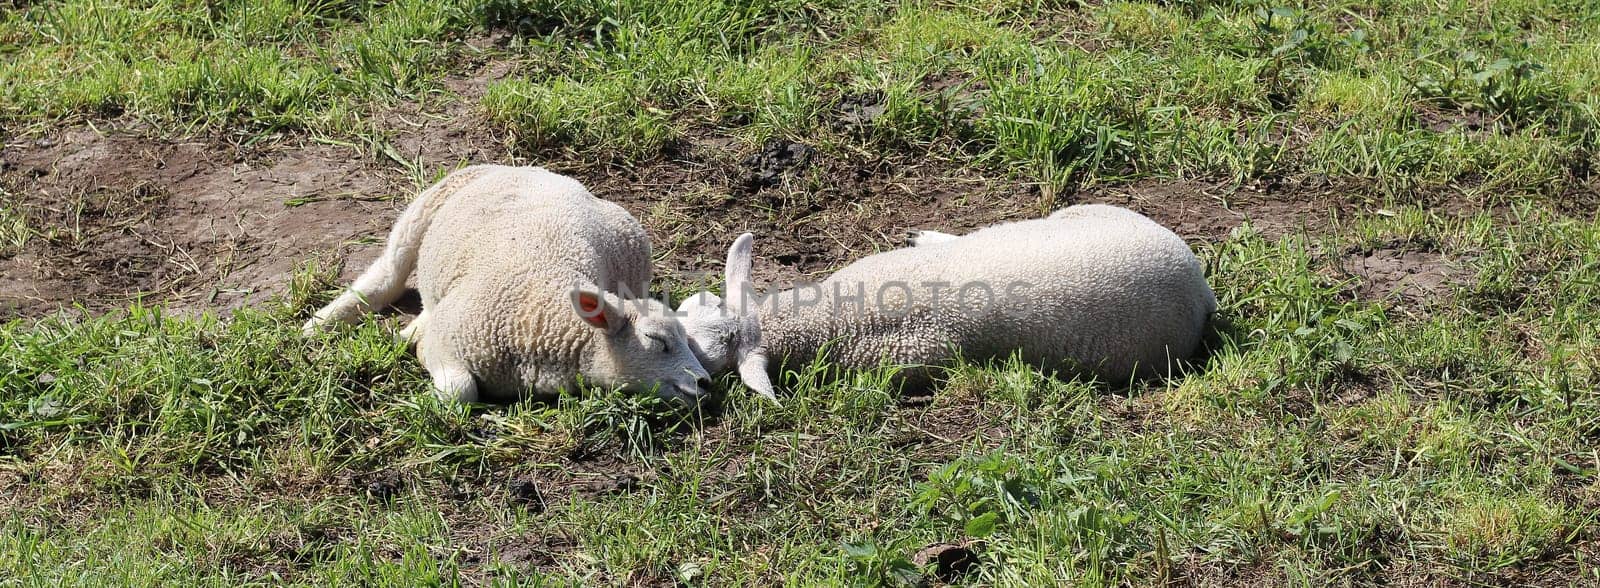 Sleeping lambs by WielandTeixeira